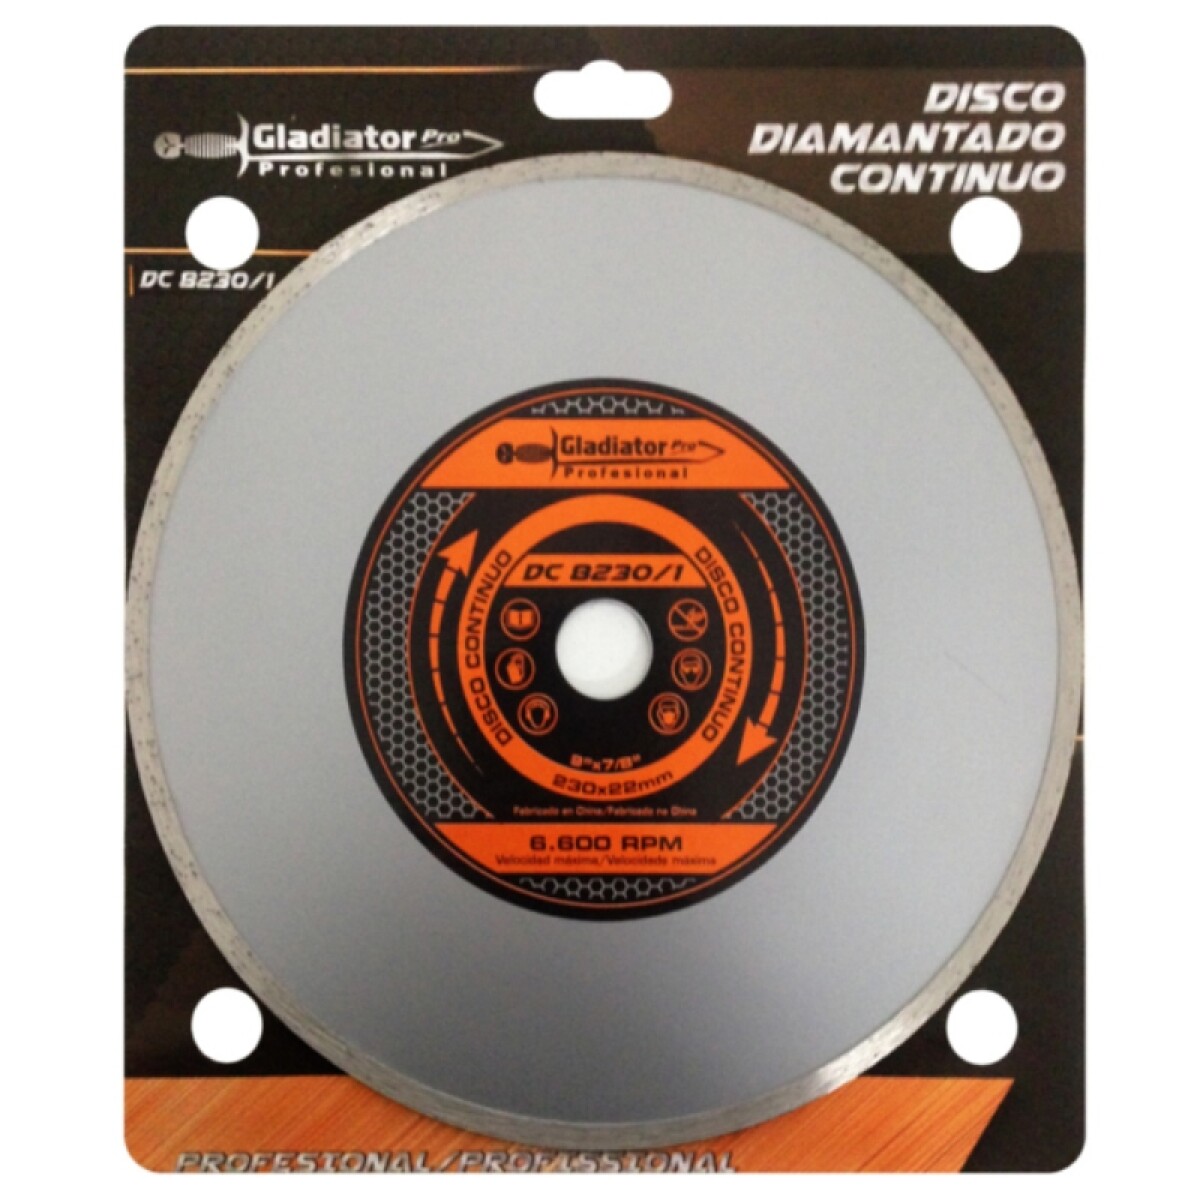 Disco diamantado continuo 9" (230x22mm) Gladiator Pro 